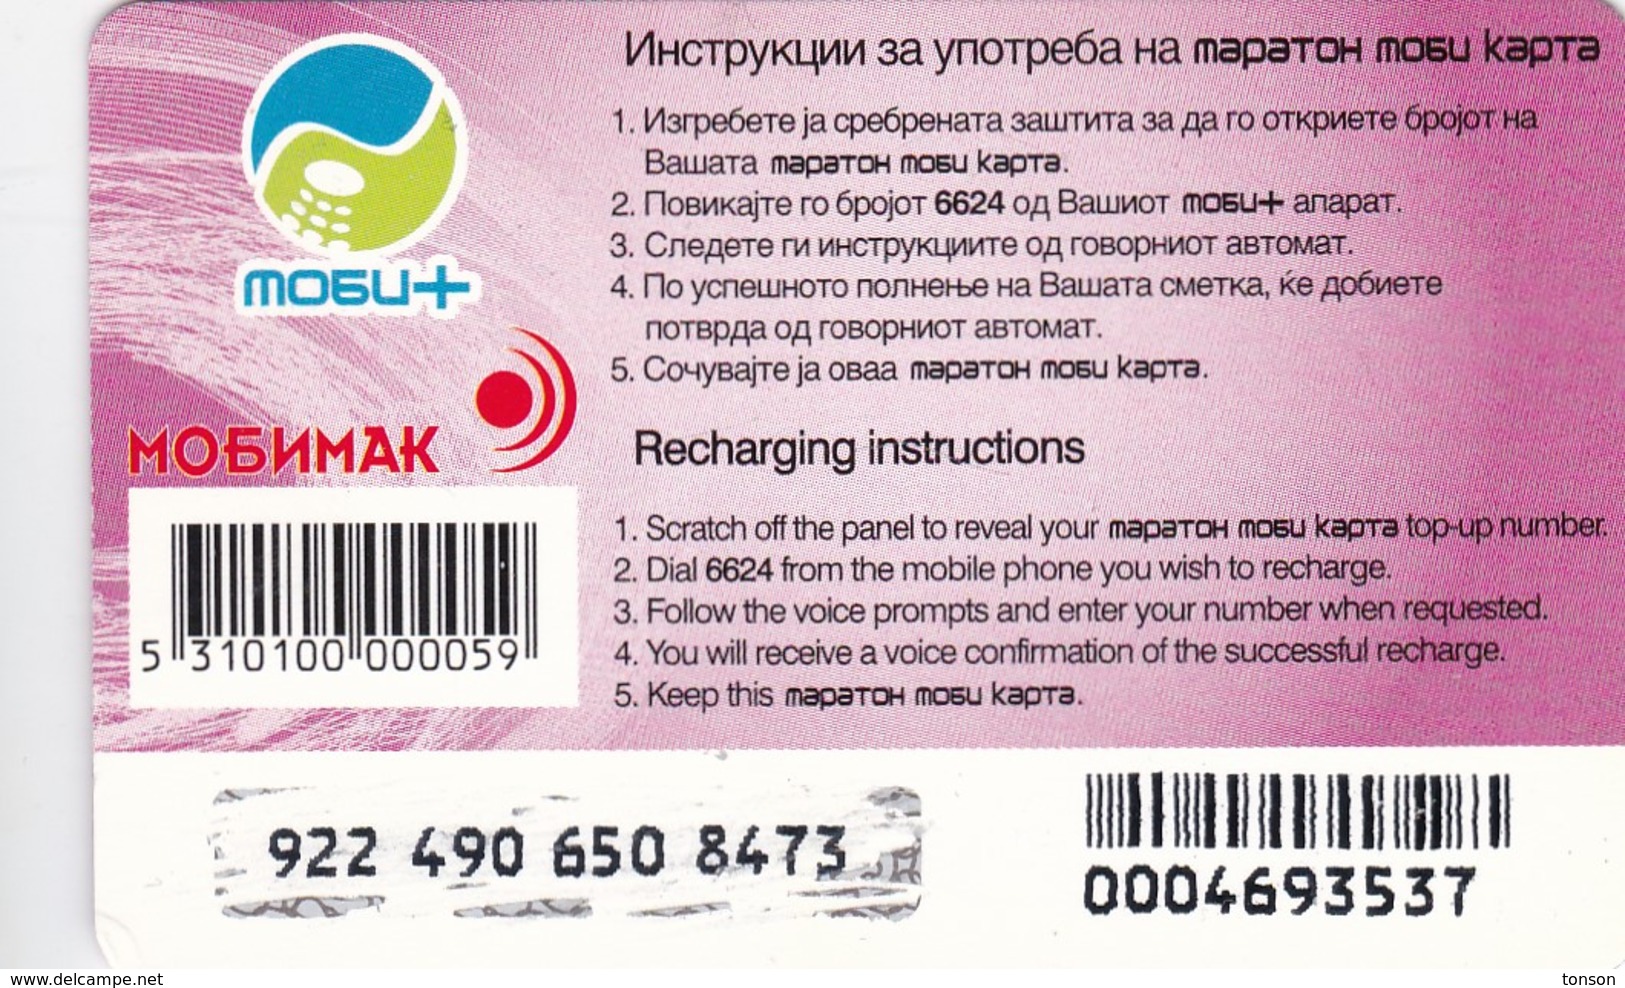 Macedonia, MK-COS-REF-?, 750 Units Pink Mobimak Refill Card, 2 Scans. - Macedonia Del Norte